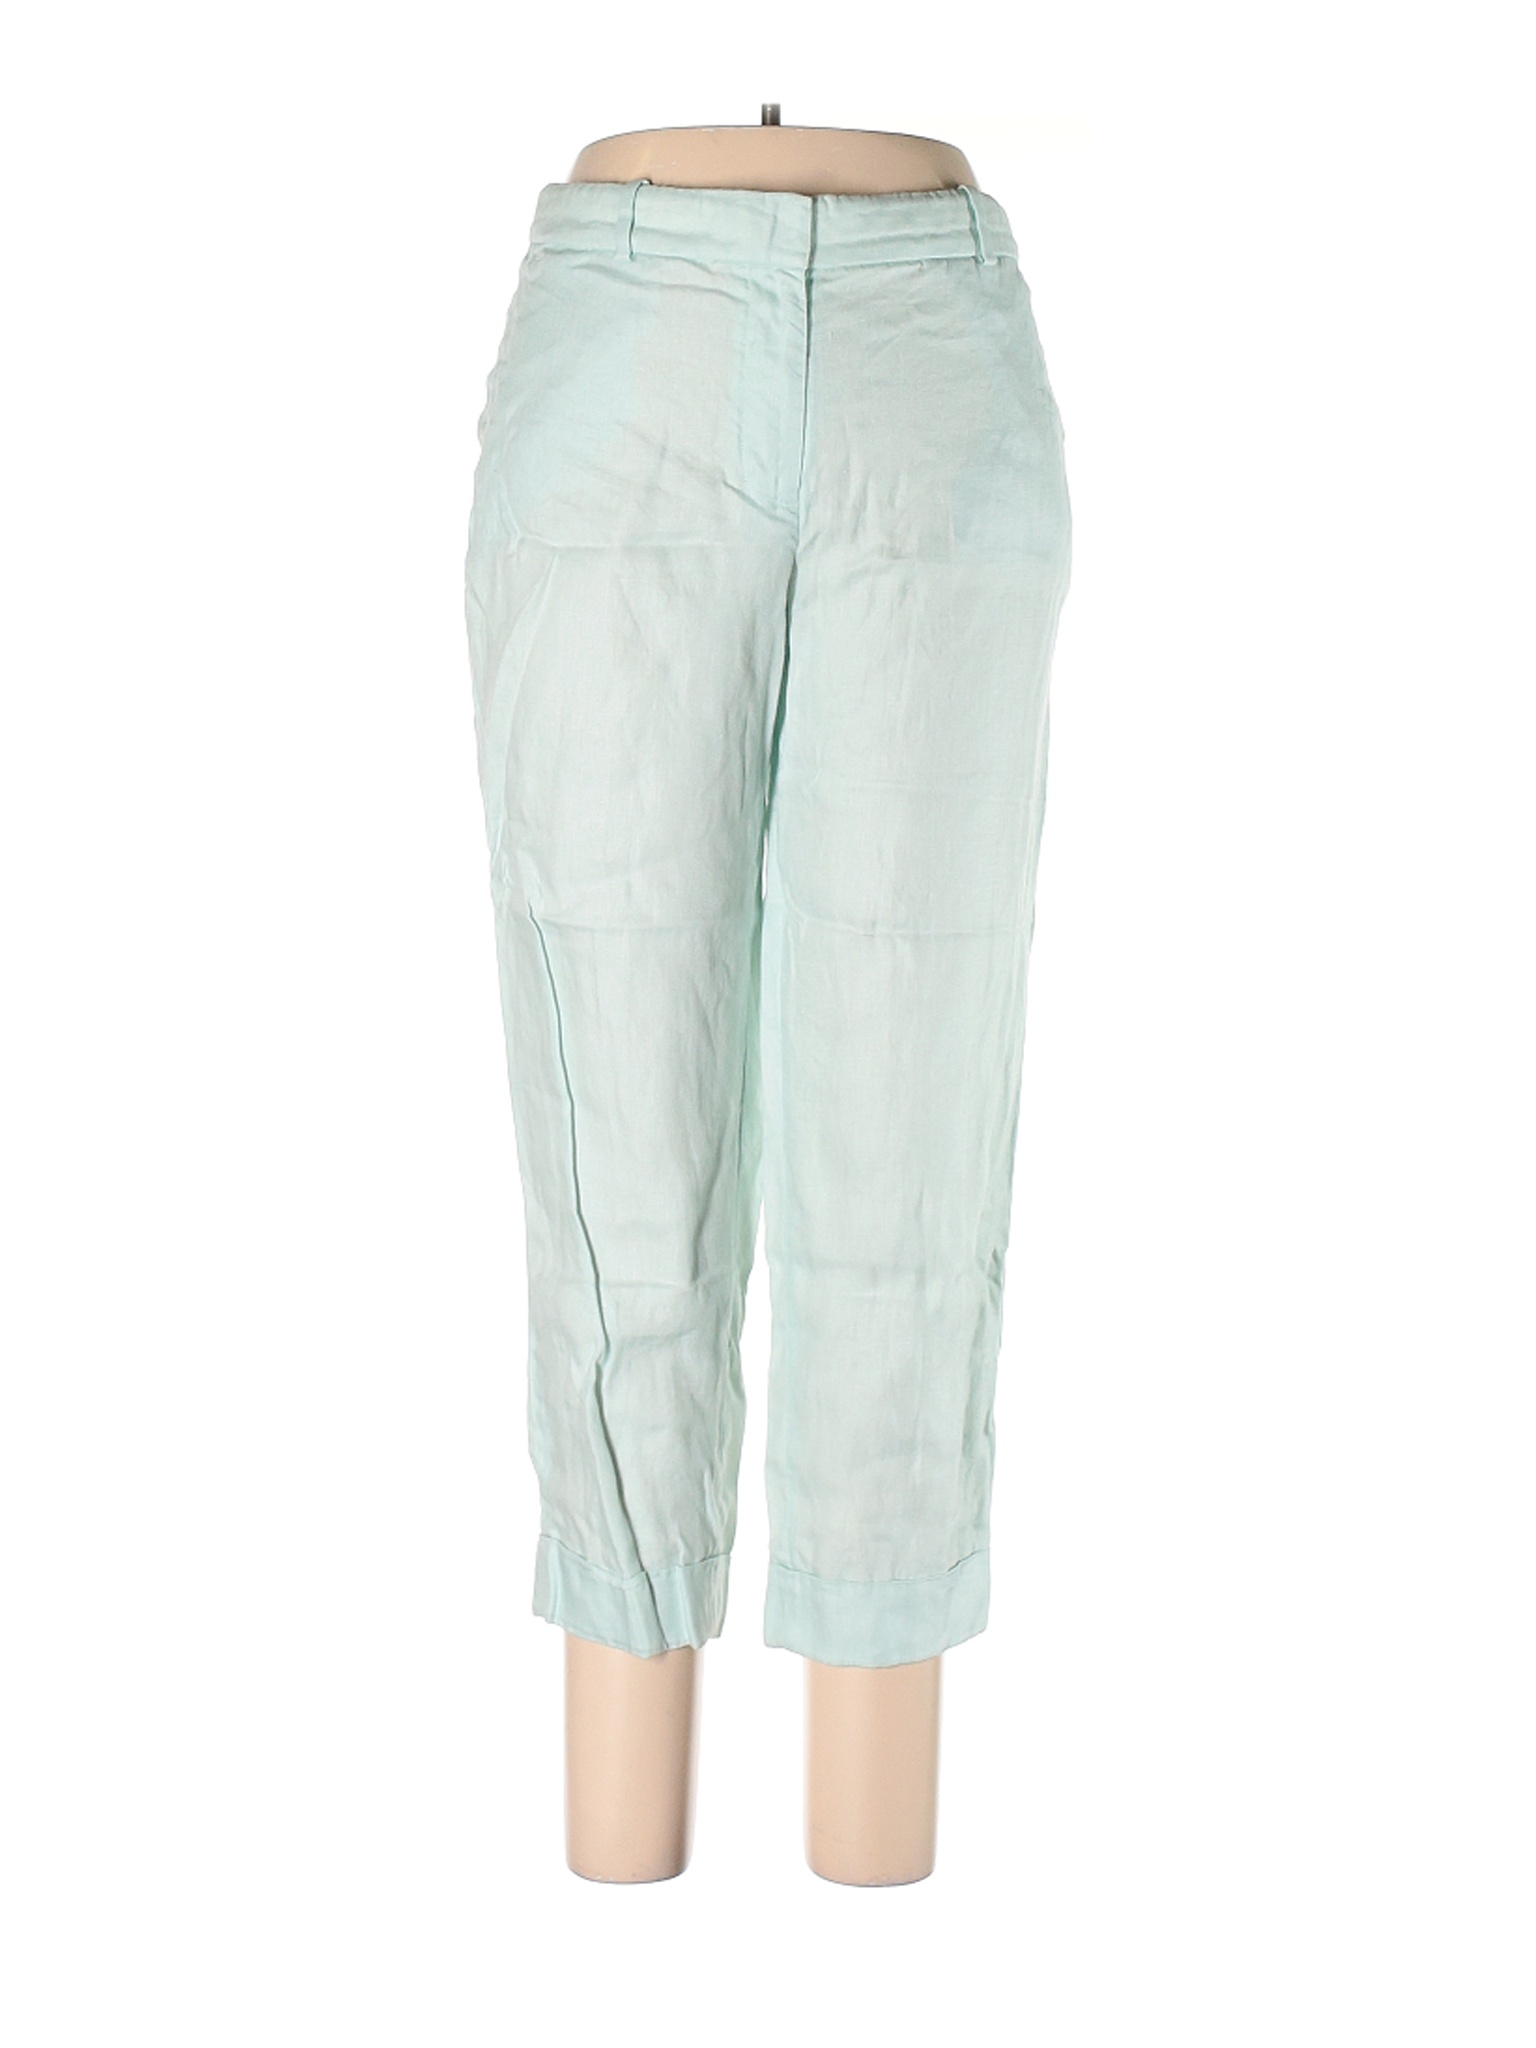 J.Crew Women Green Linen Pants 8 | eBay